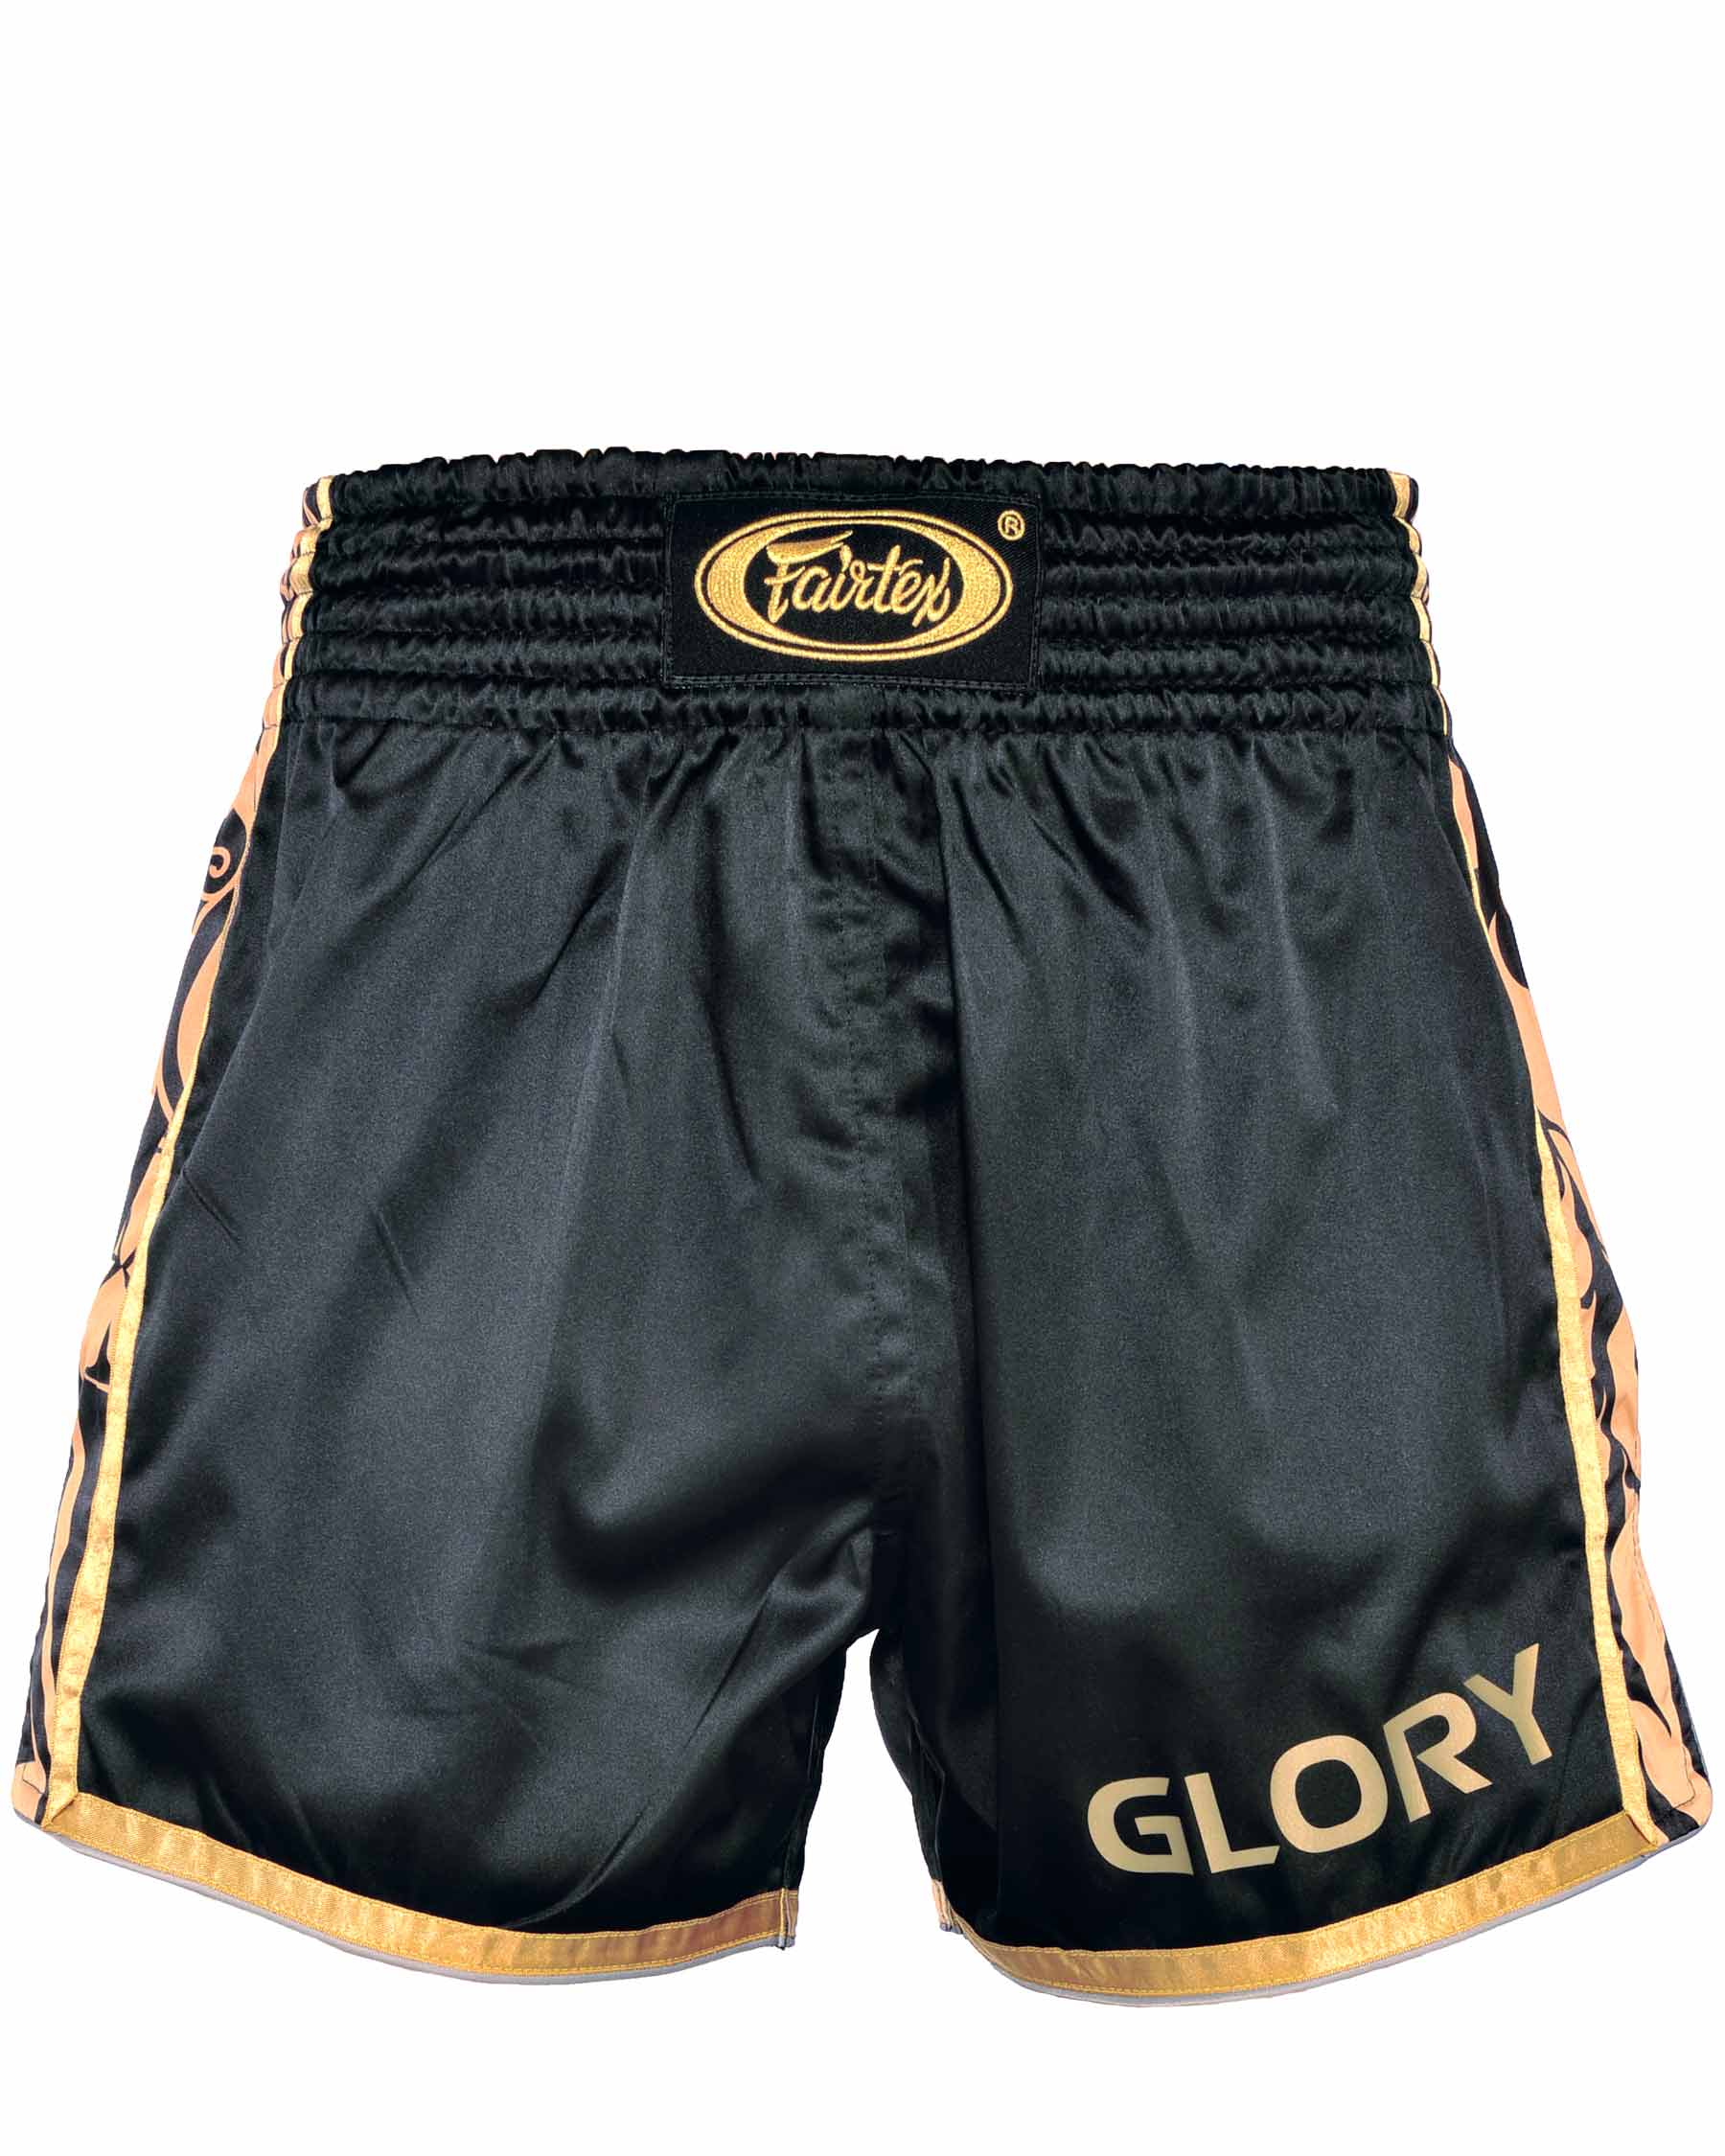 Fairtex BSG1 GLORY boksbroekje in zwart/goud